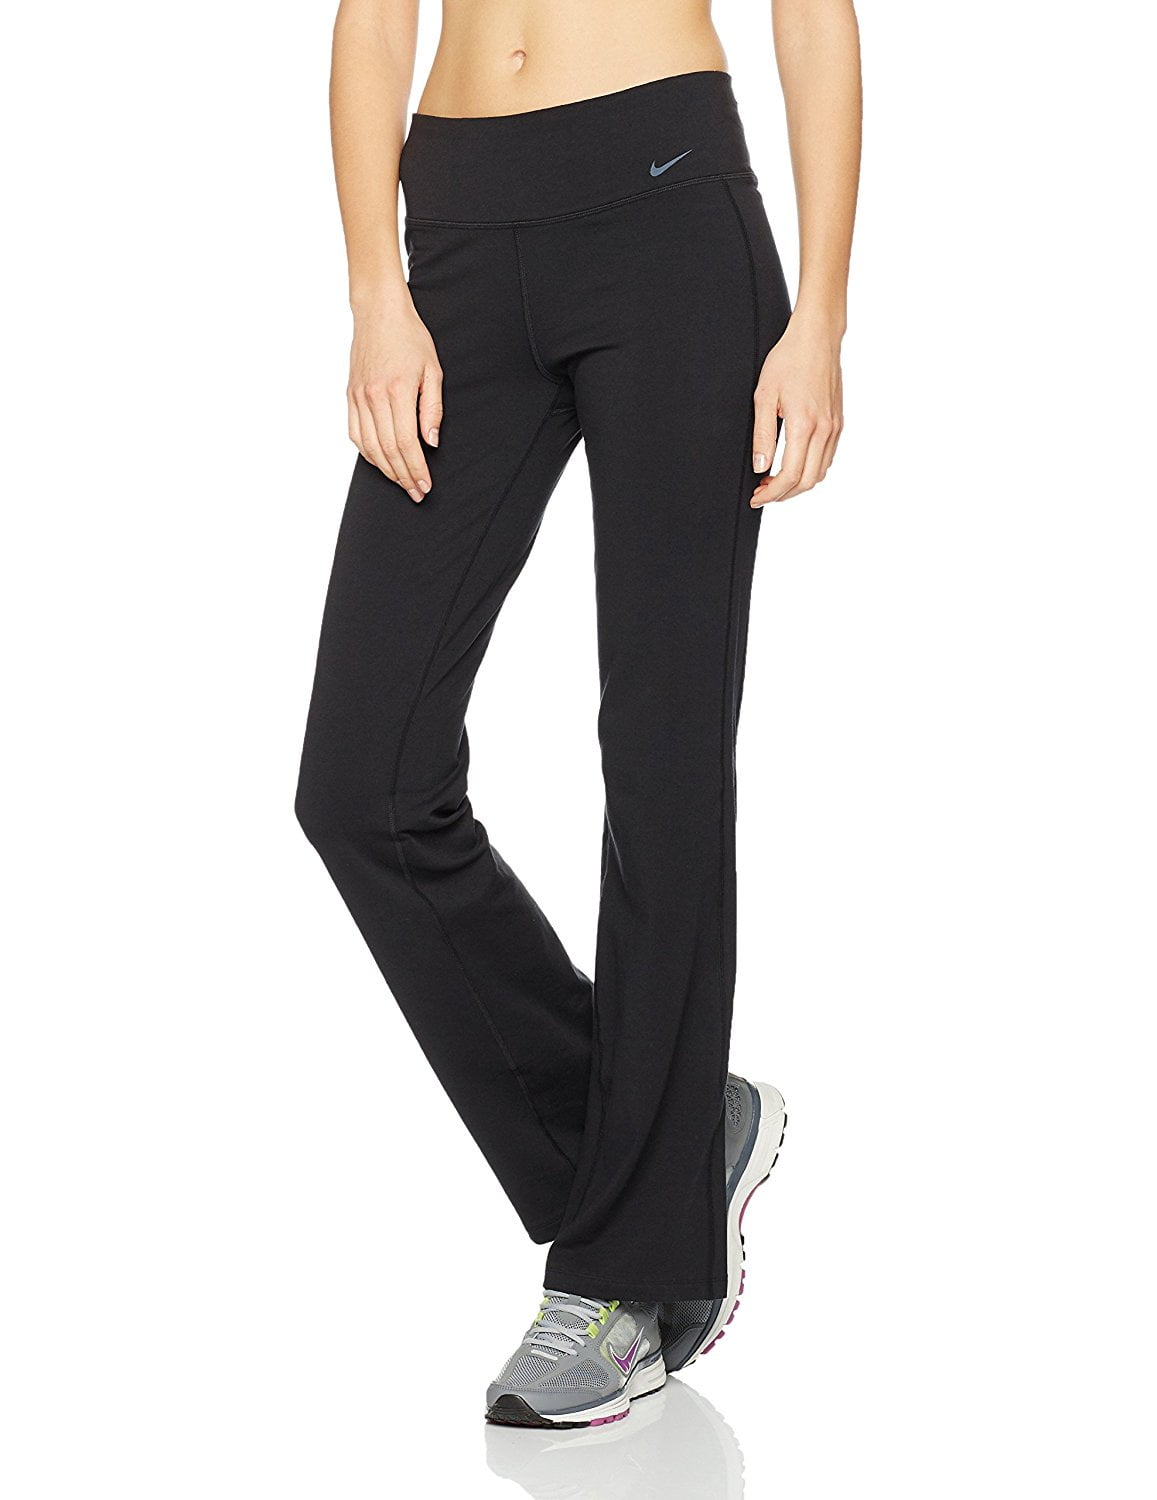 Women's Dri-Fit Classic Fit Pants-Black - Walmart.com